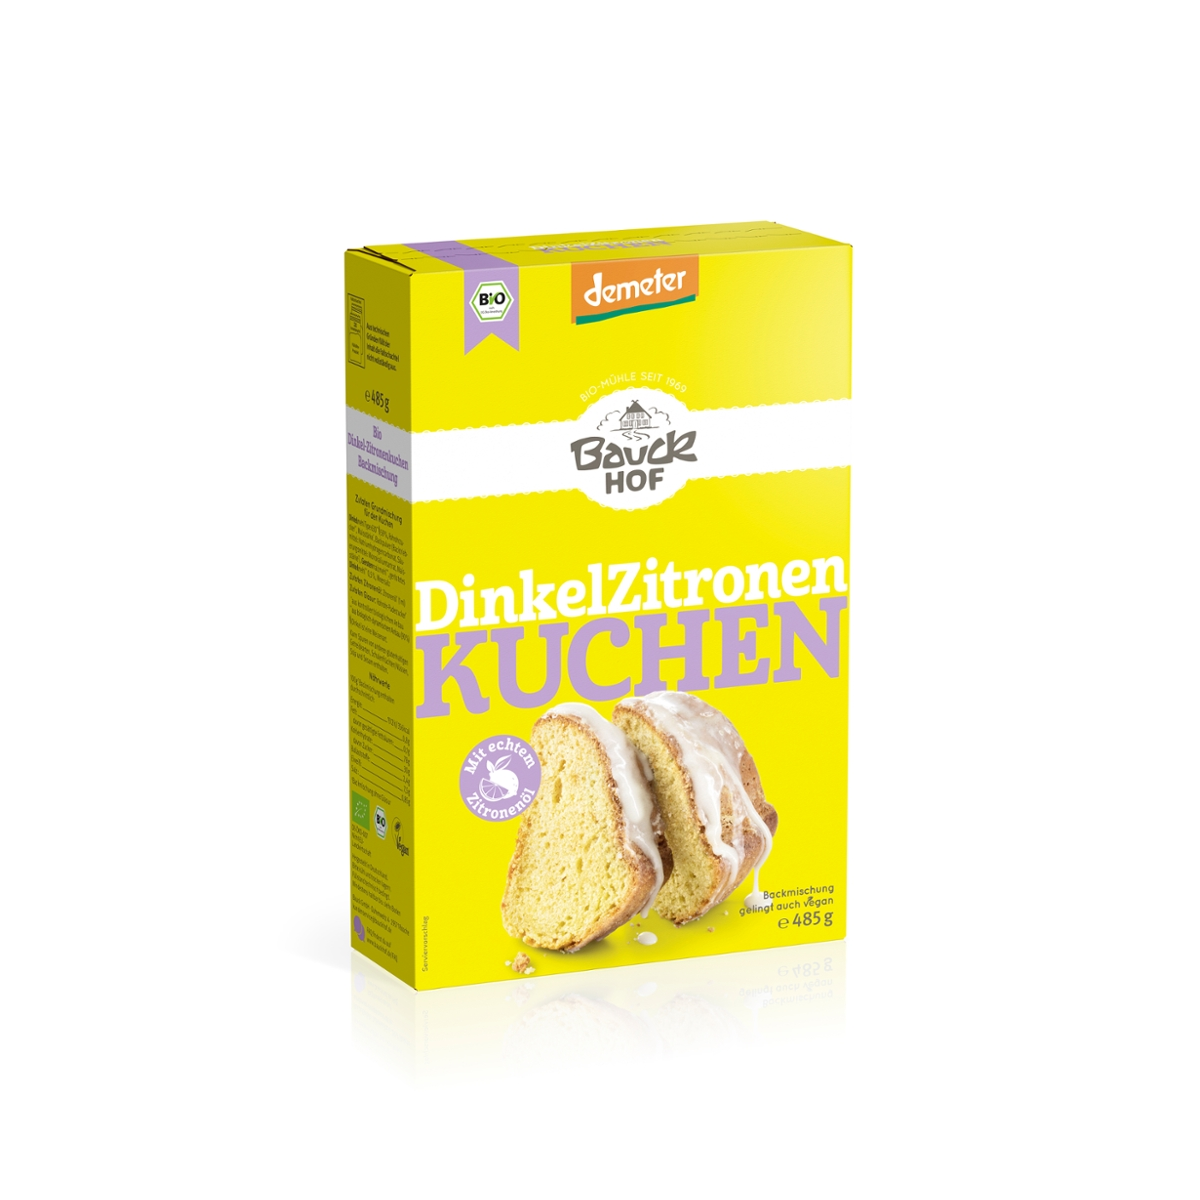 Demeter Dinkel-Zitronenkuchen Bauck